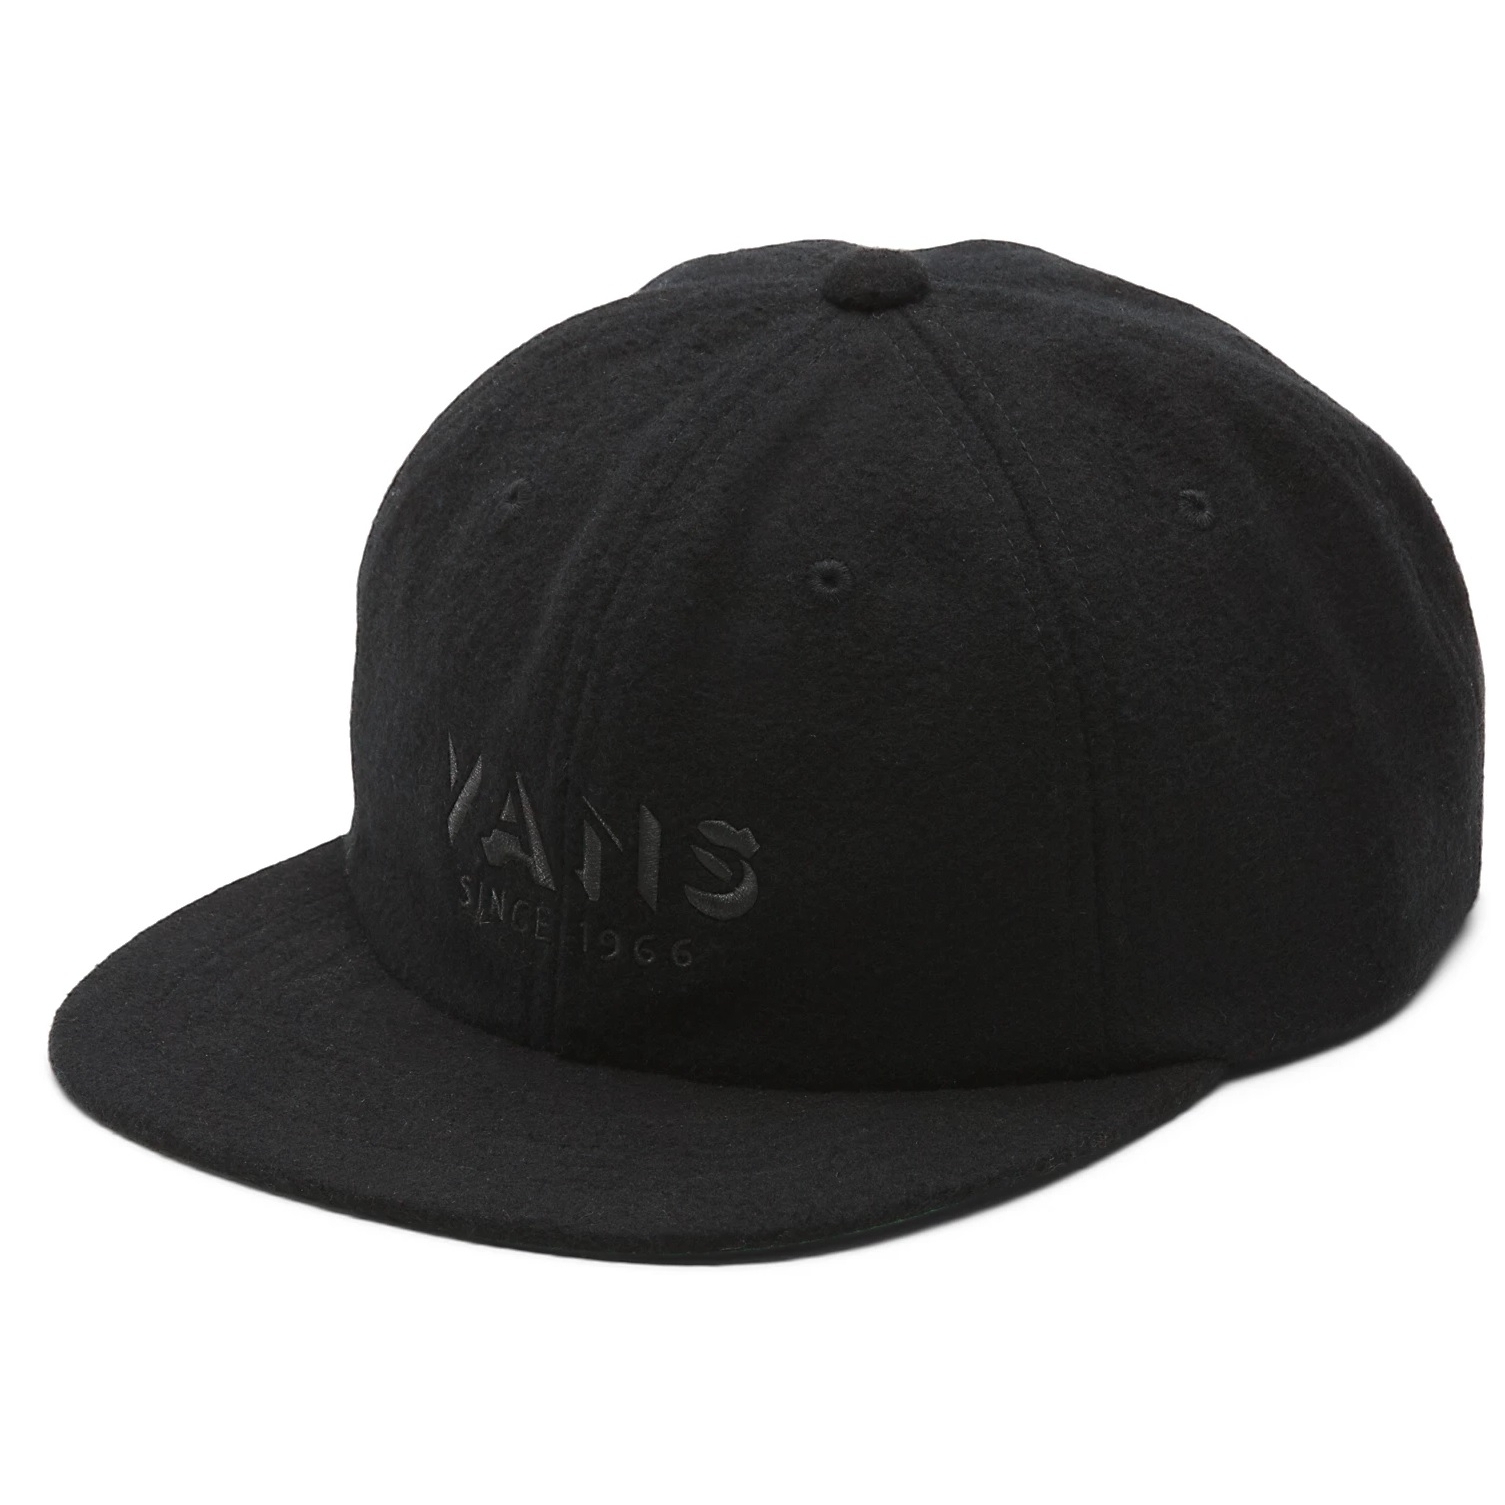 Clark Vintage Unstructured Hat (Black)